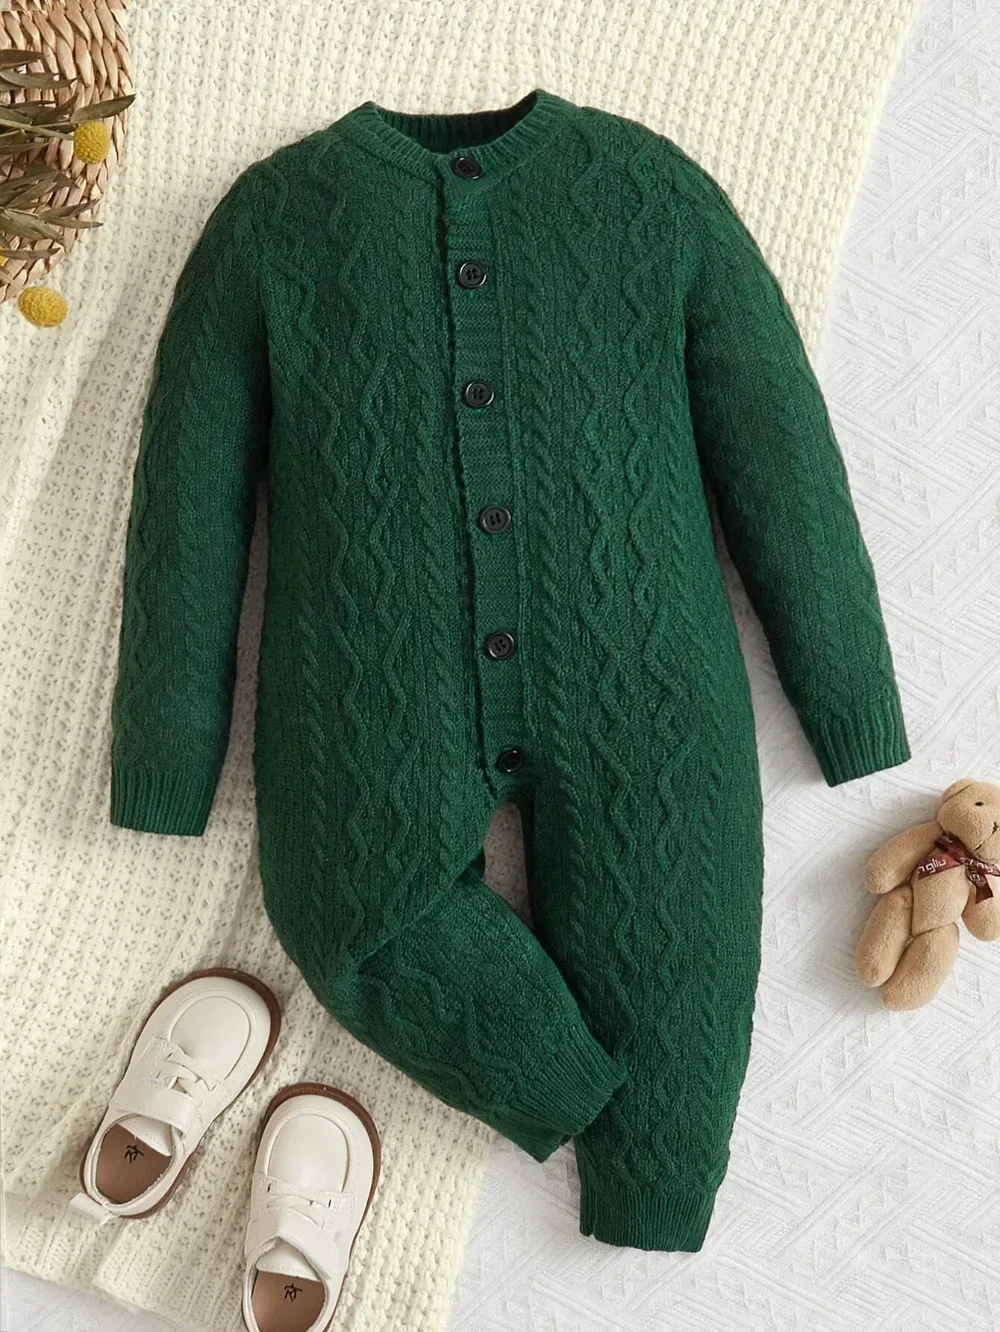 boy's baby sweater